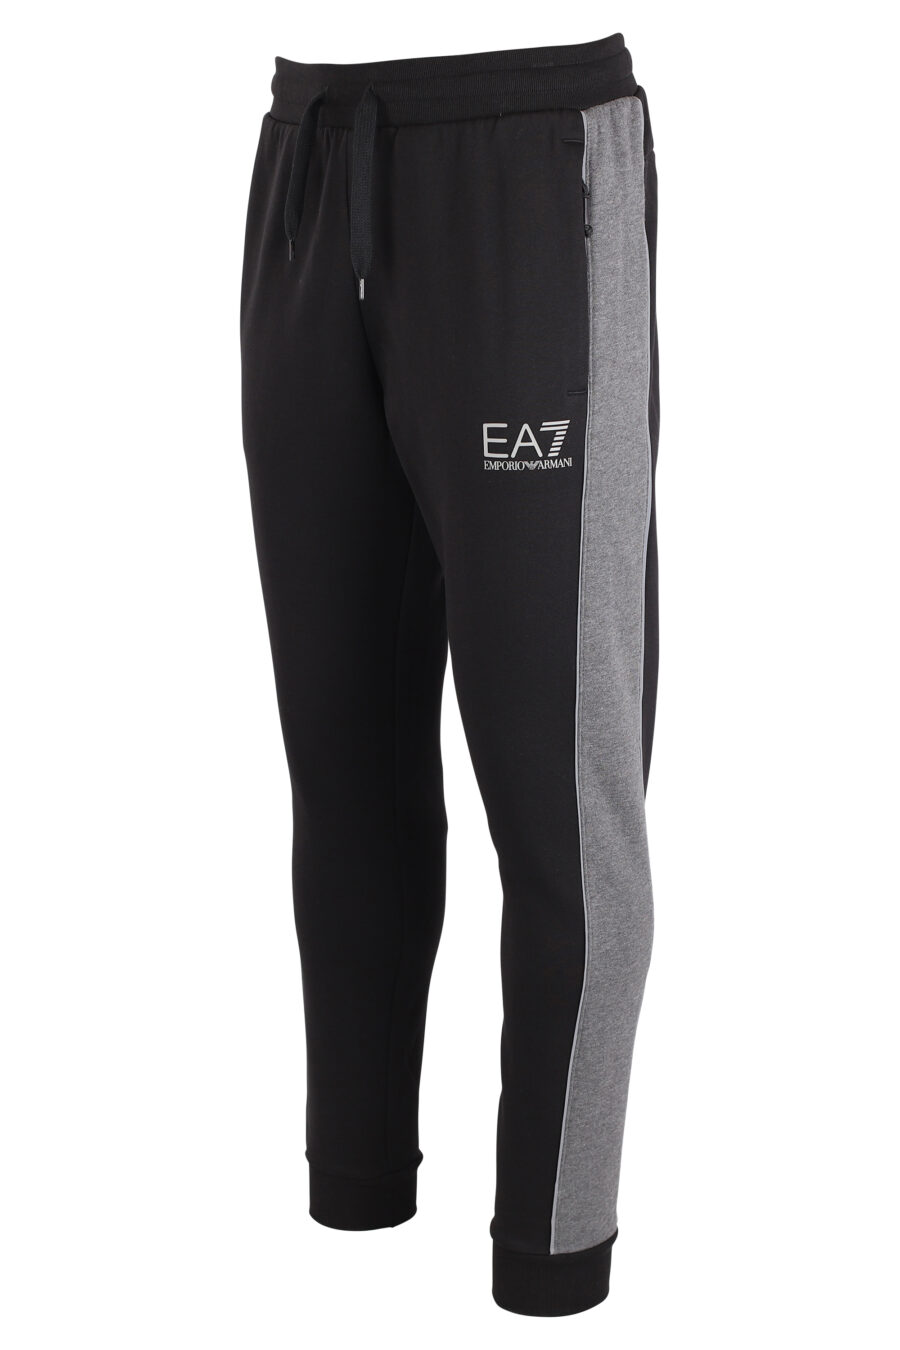 Pantalón de chándal negro con franjas grises y logo lateral "lux identity" - IMG 4106